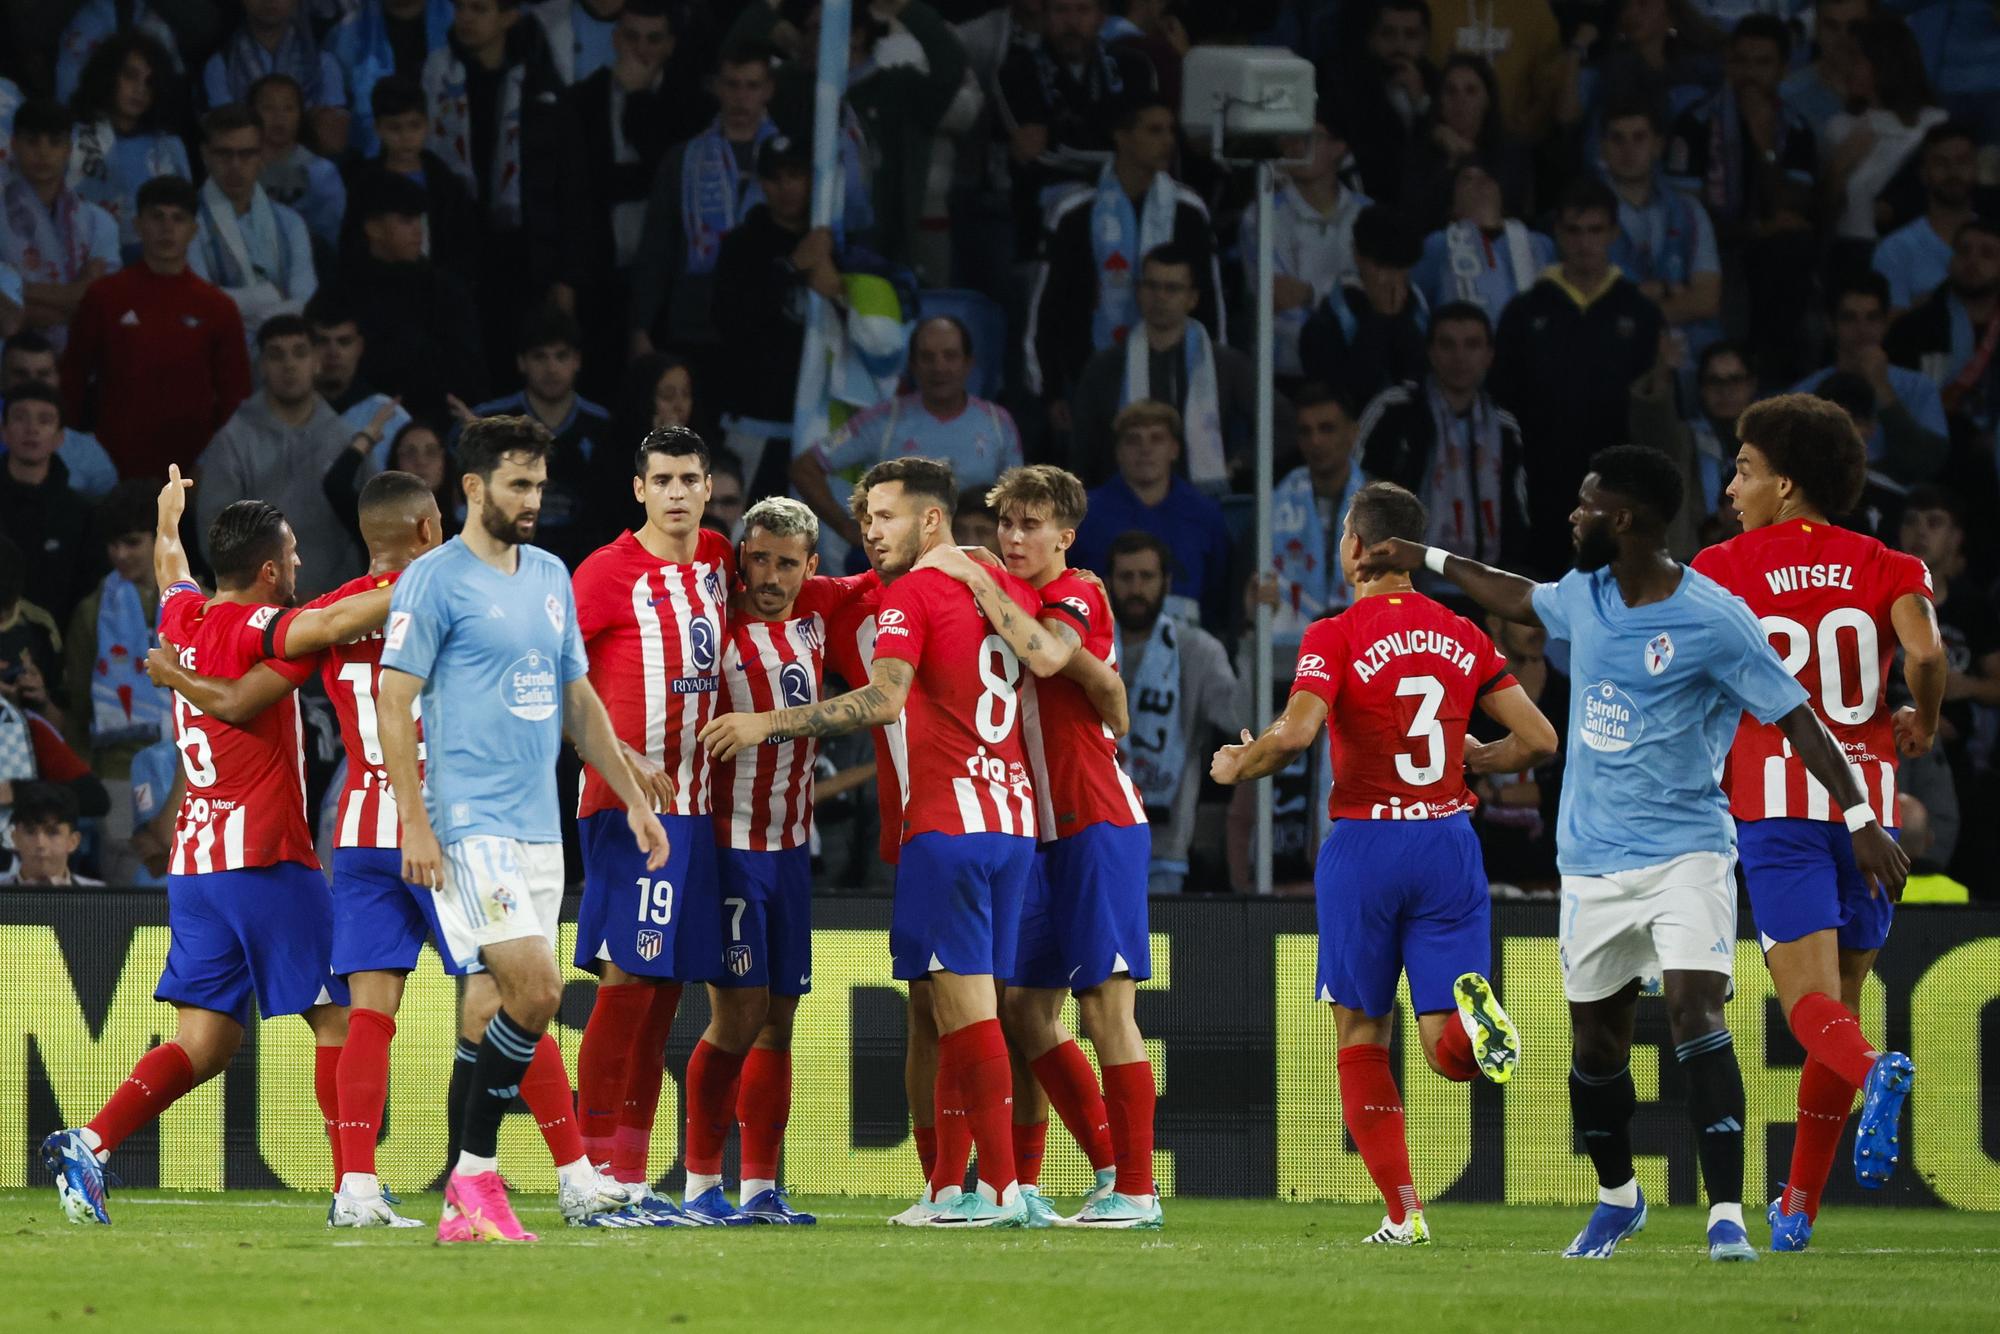 Celta de Vigo vs Atlético de Madrid